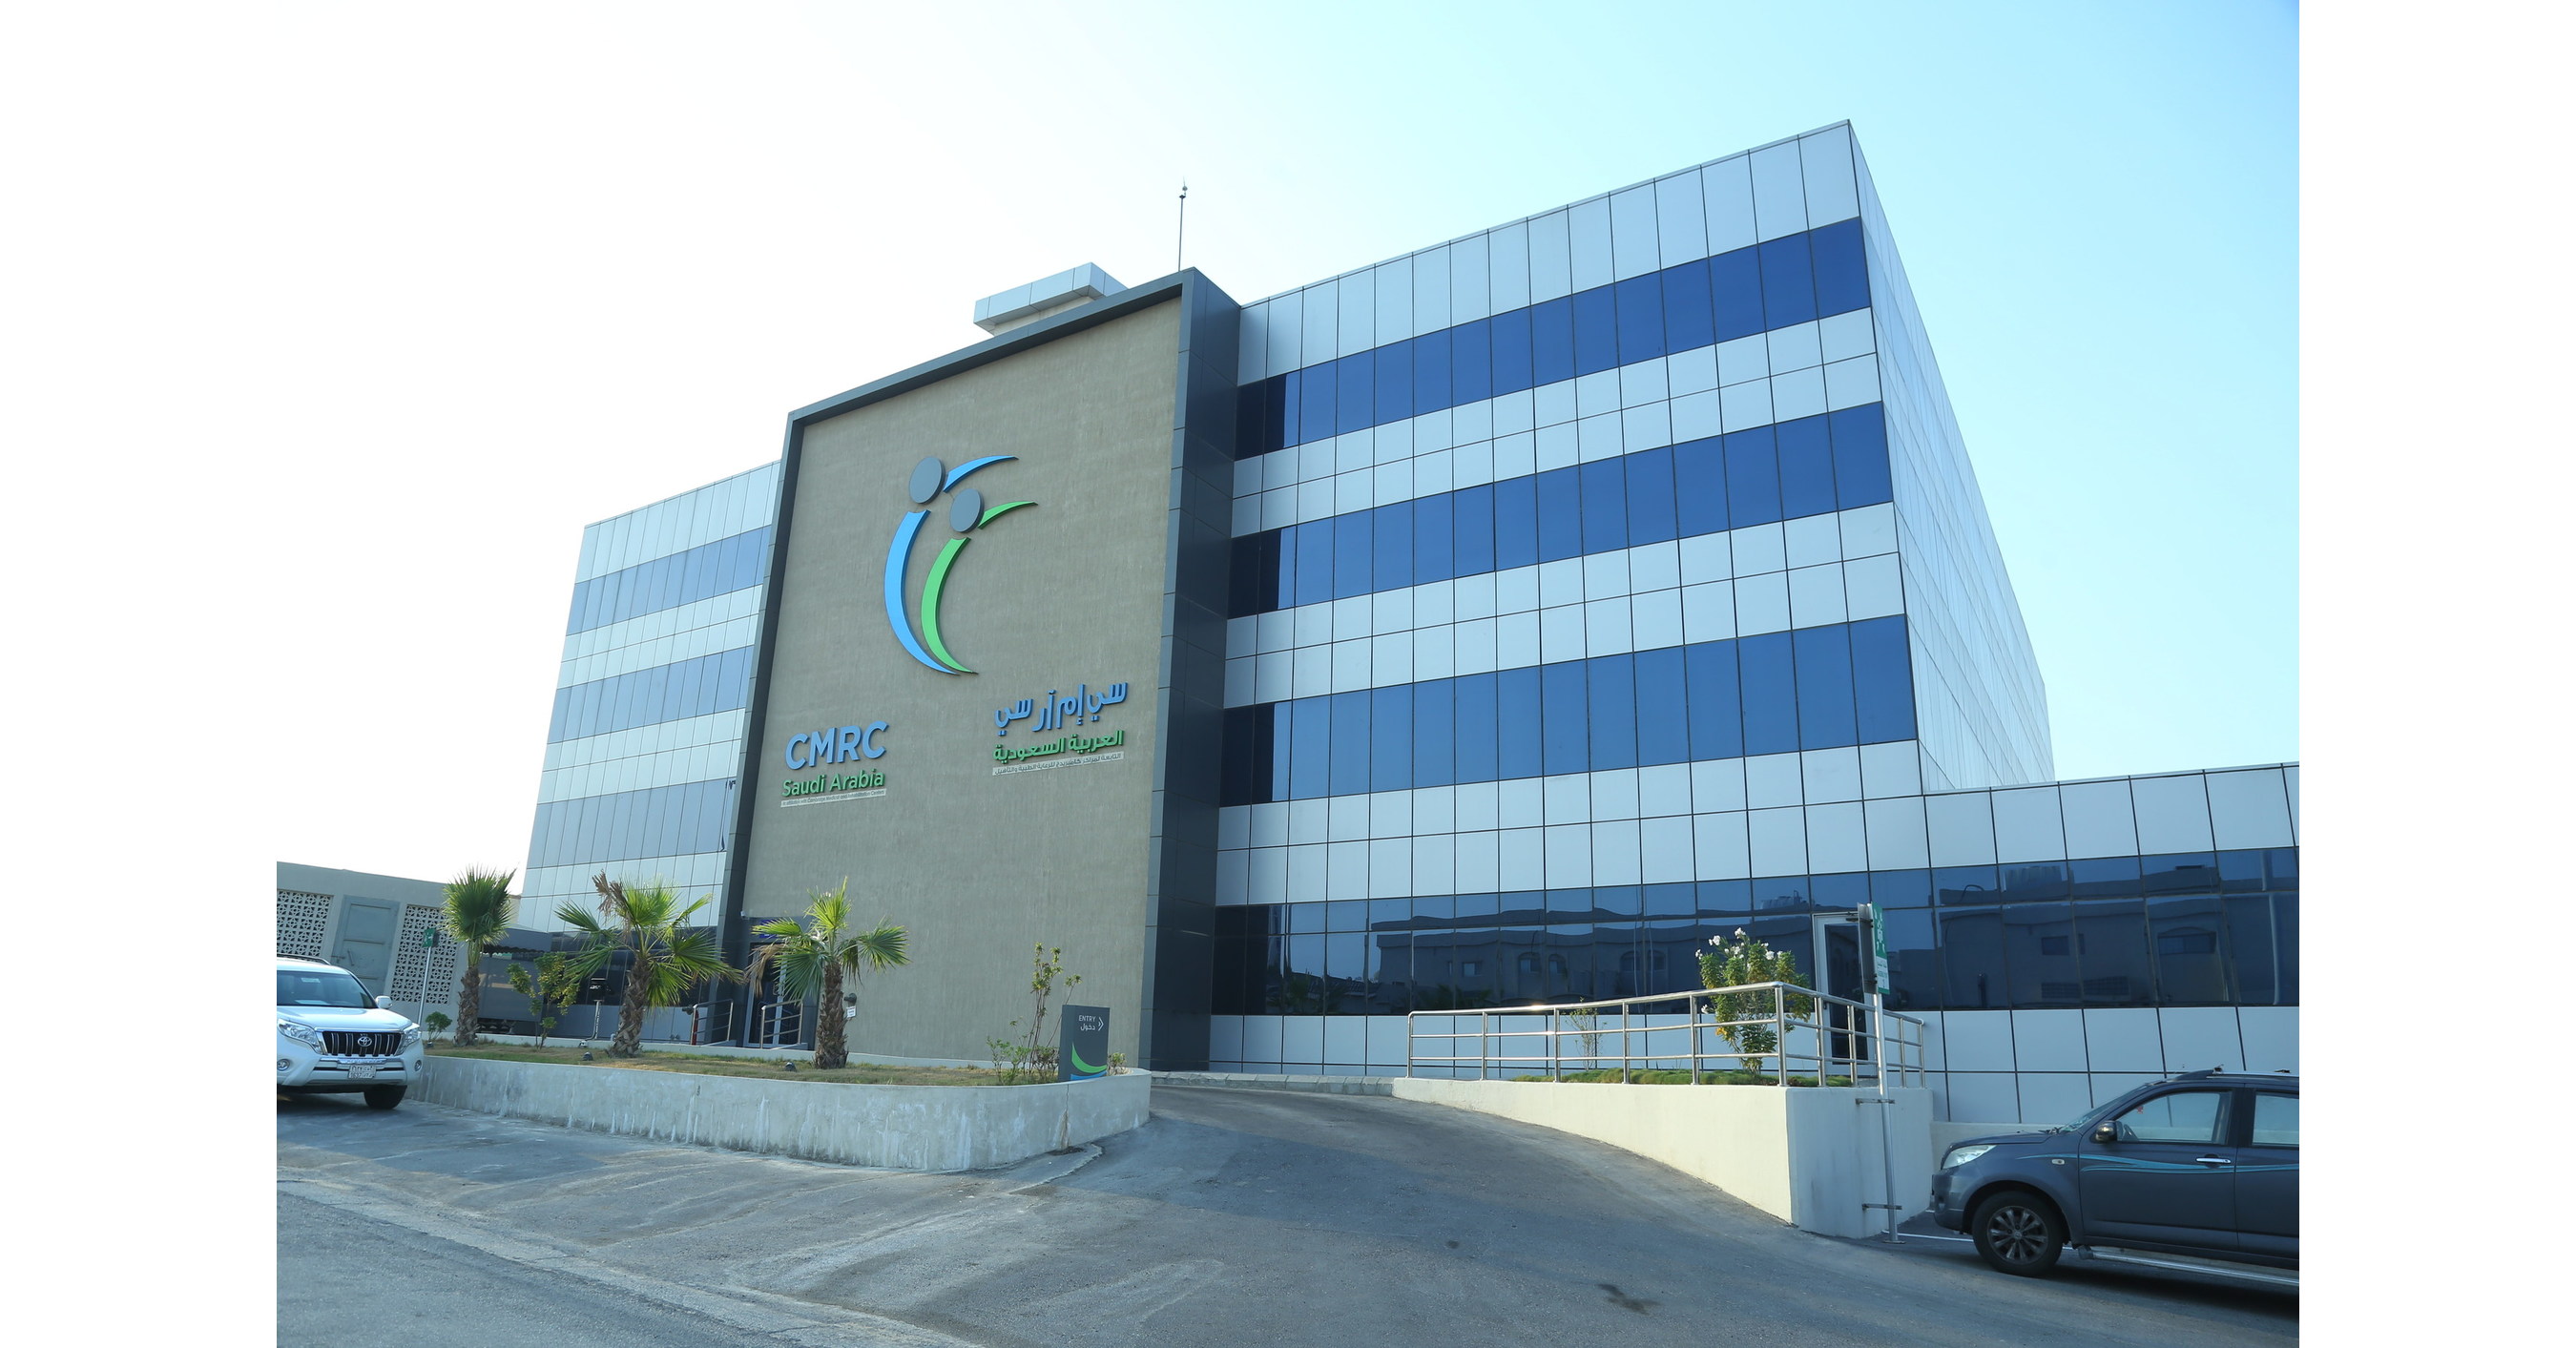 CMRC المملكة العربية السعودية هو أول مستشفى خاص معتمد من قبل المملكة العربية السعودية لبرامج المرضى الداخليين والمرضى الداخليين من قبل هيئة اعتماد مرافق إعادة التأهيل بعد عامين فقط من التشغيل.